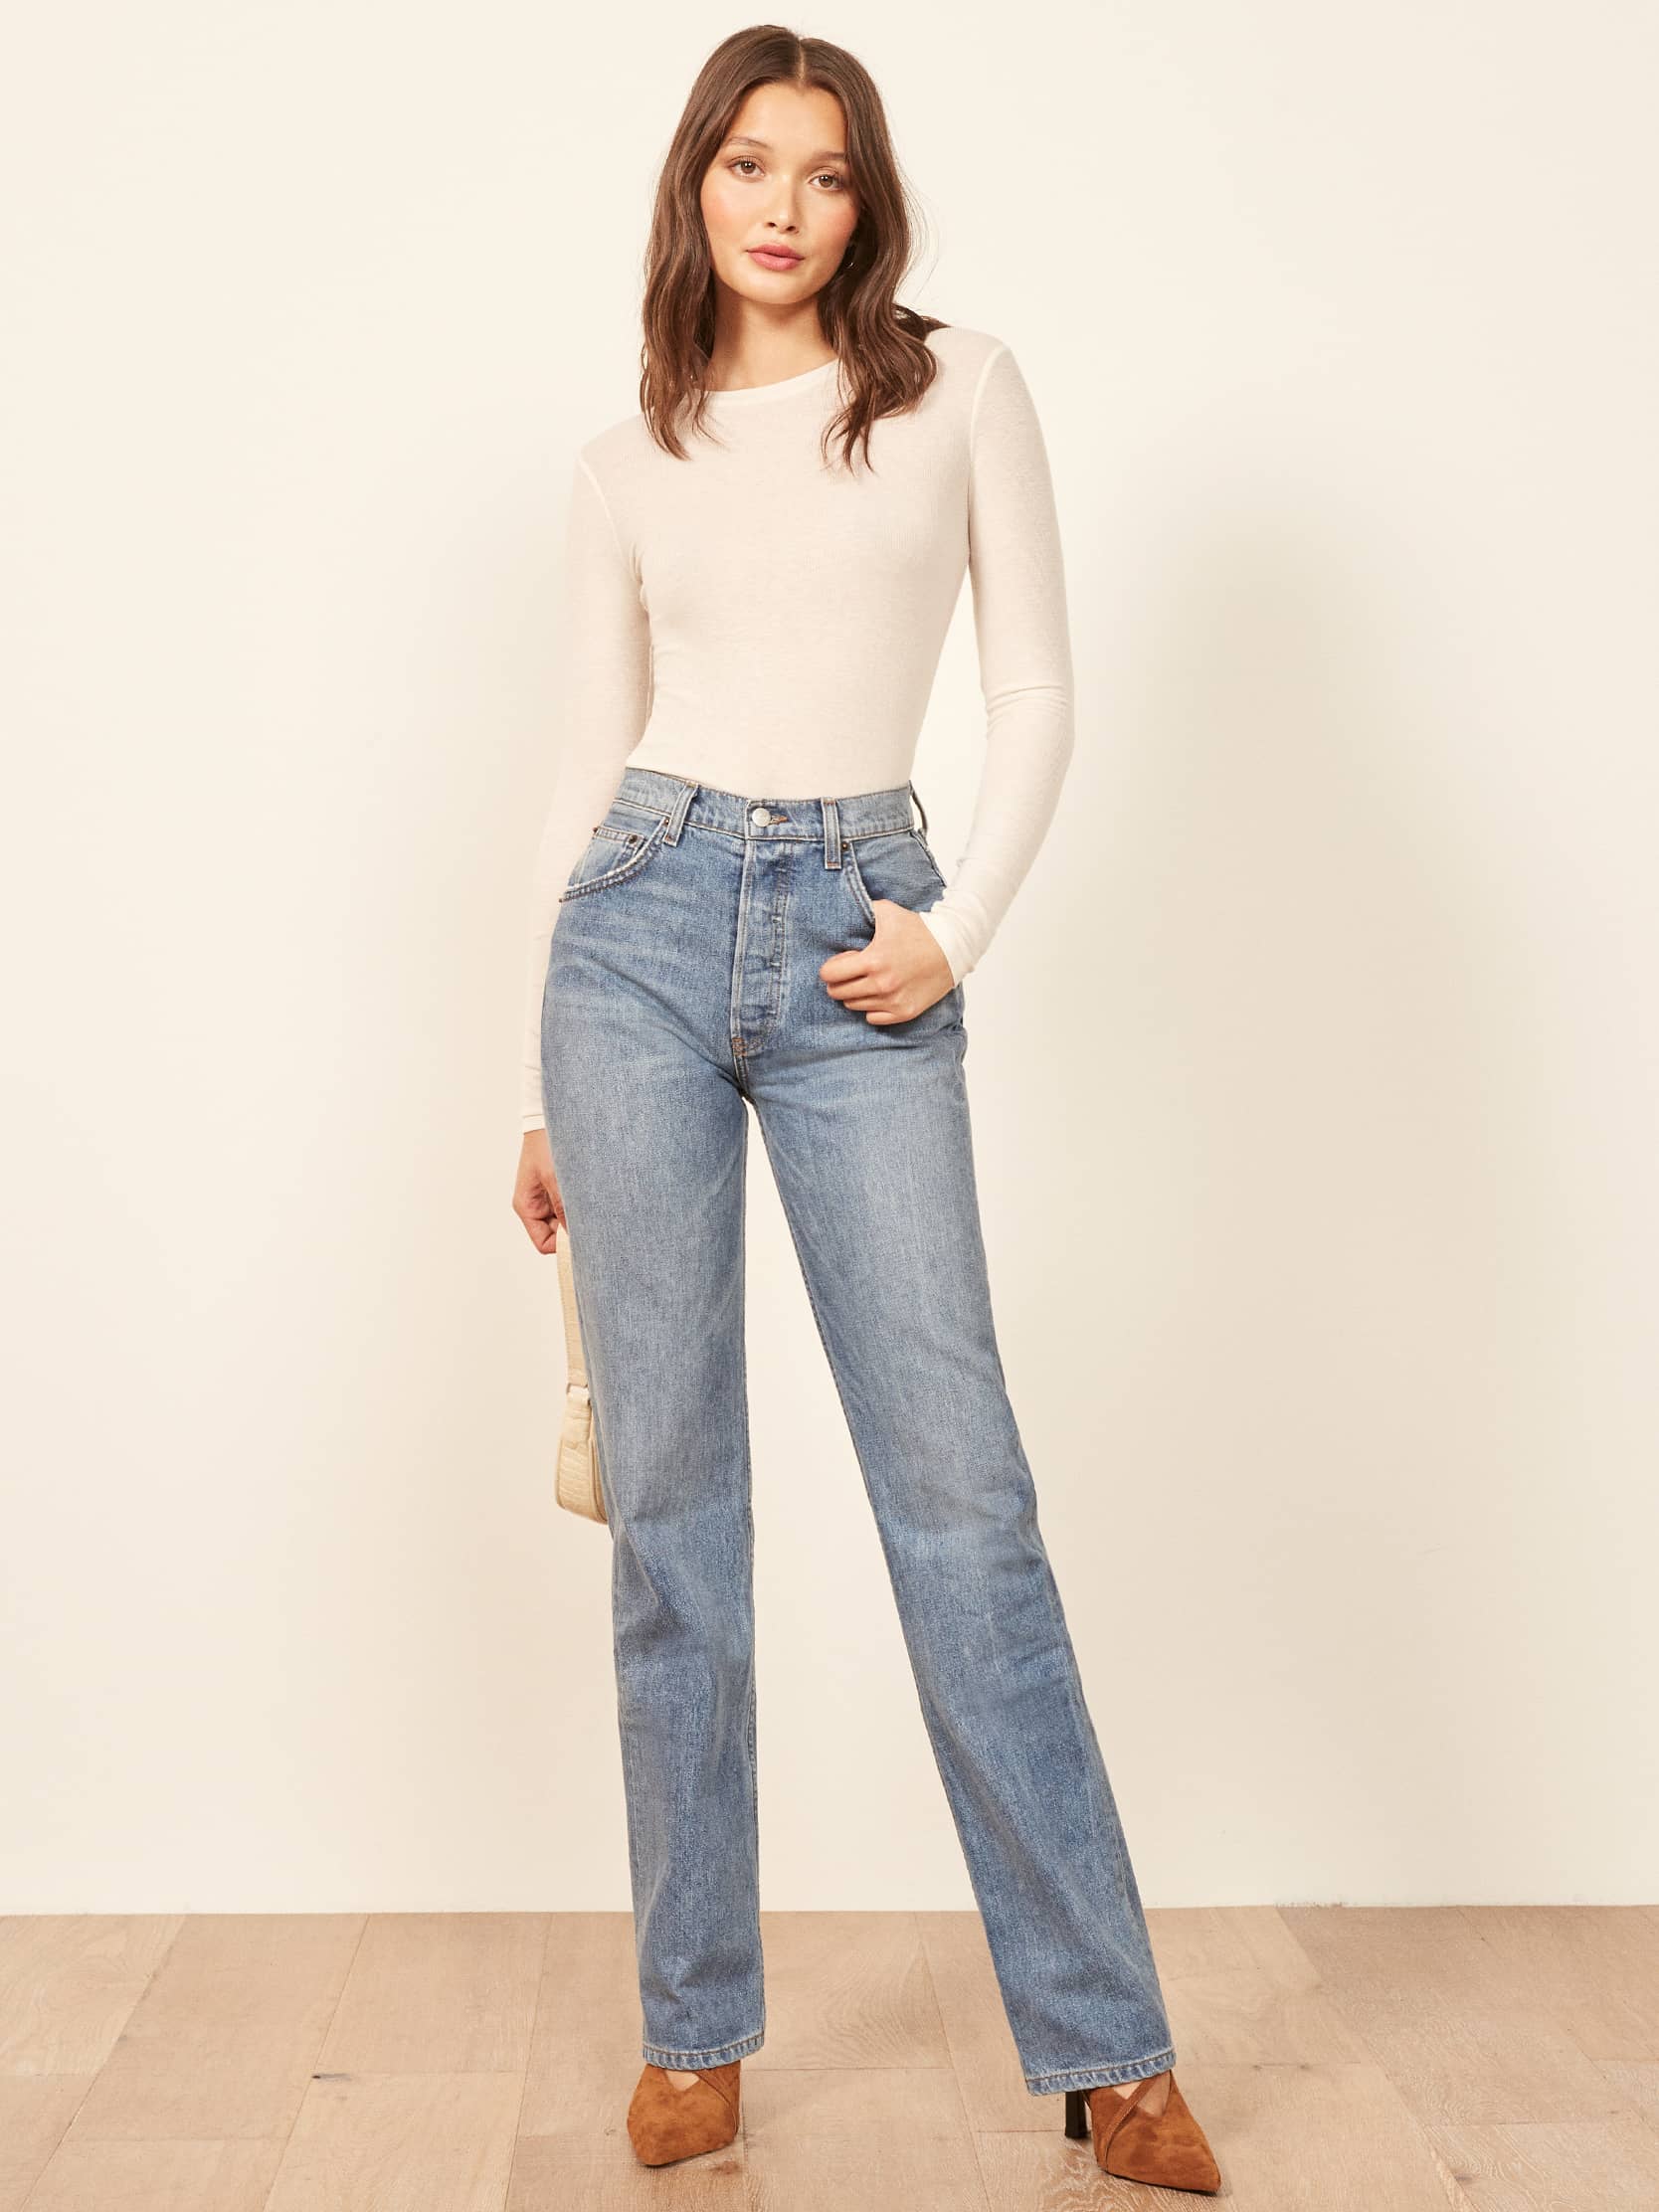 super skinny jeans womens